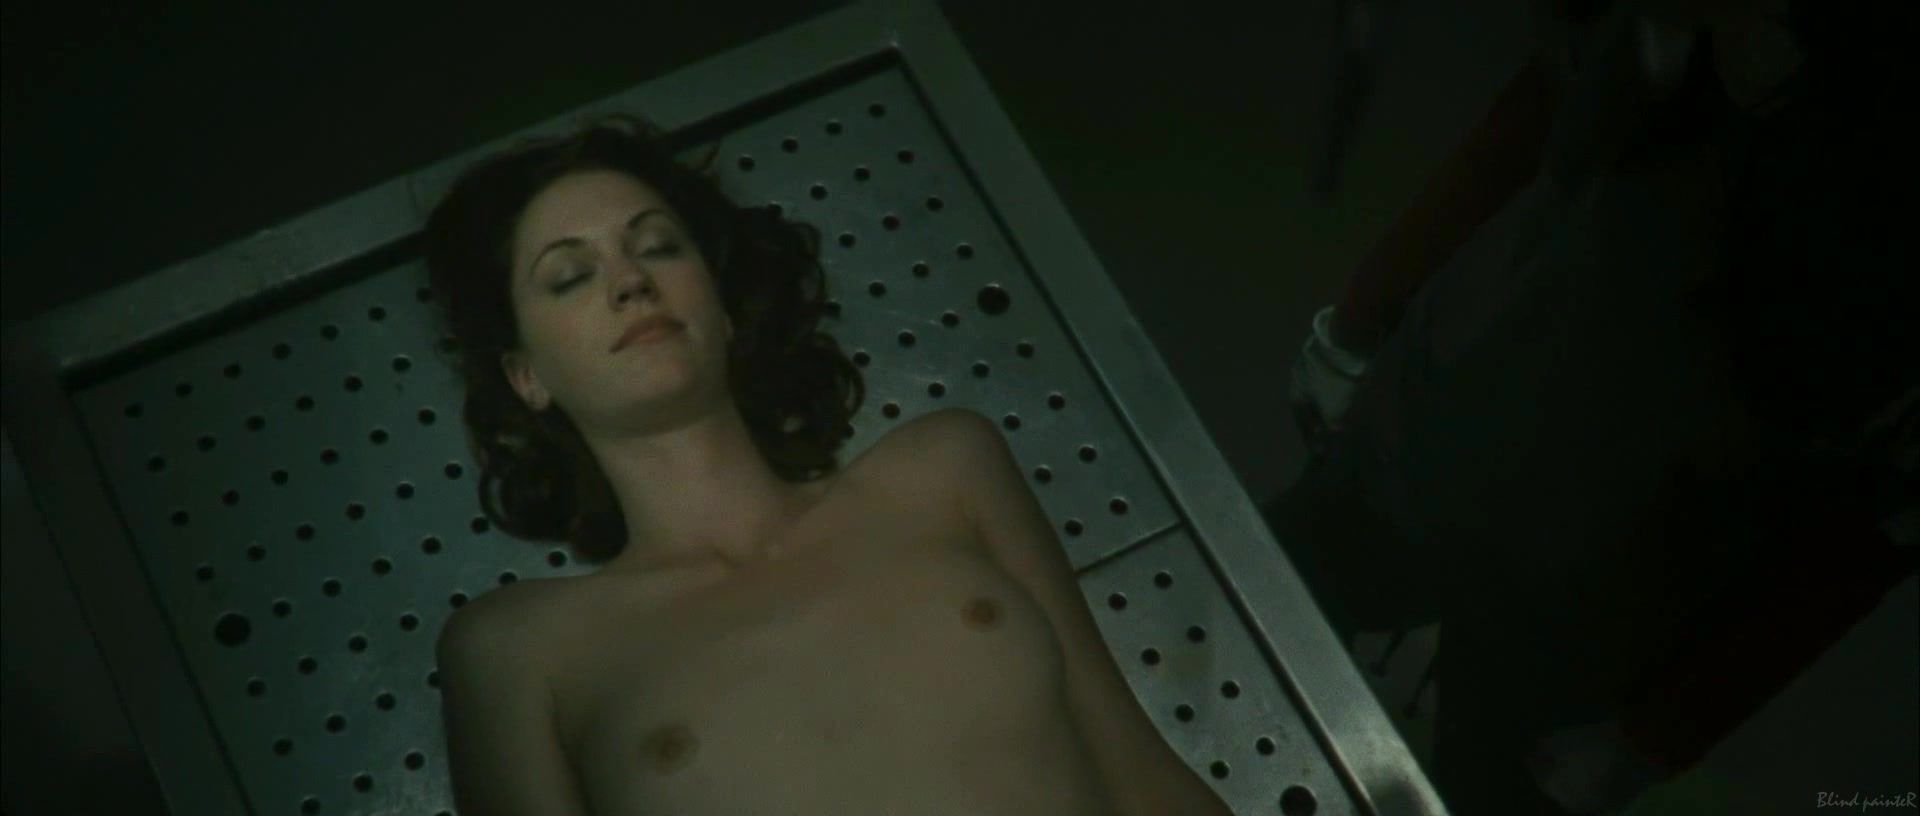 High Sex video Lauren Lee Smith nude - Pathology (2008) Hand